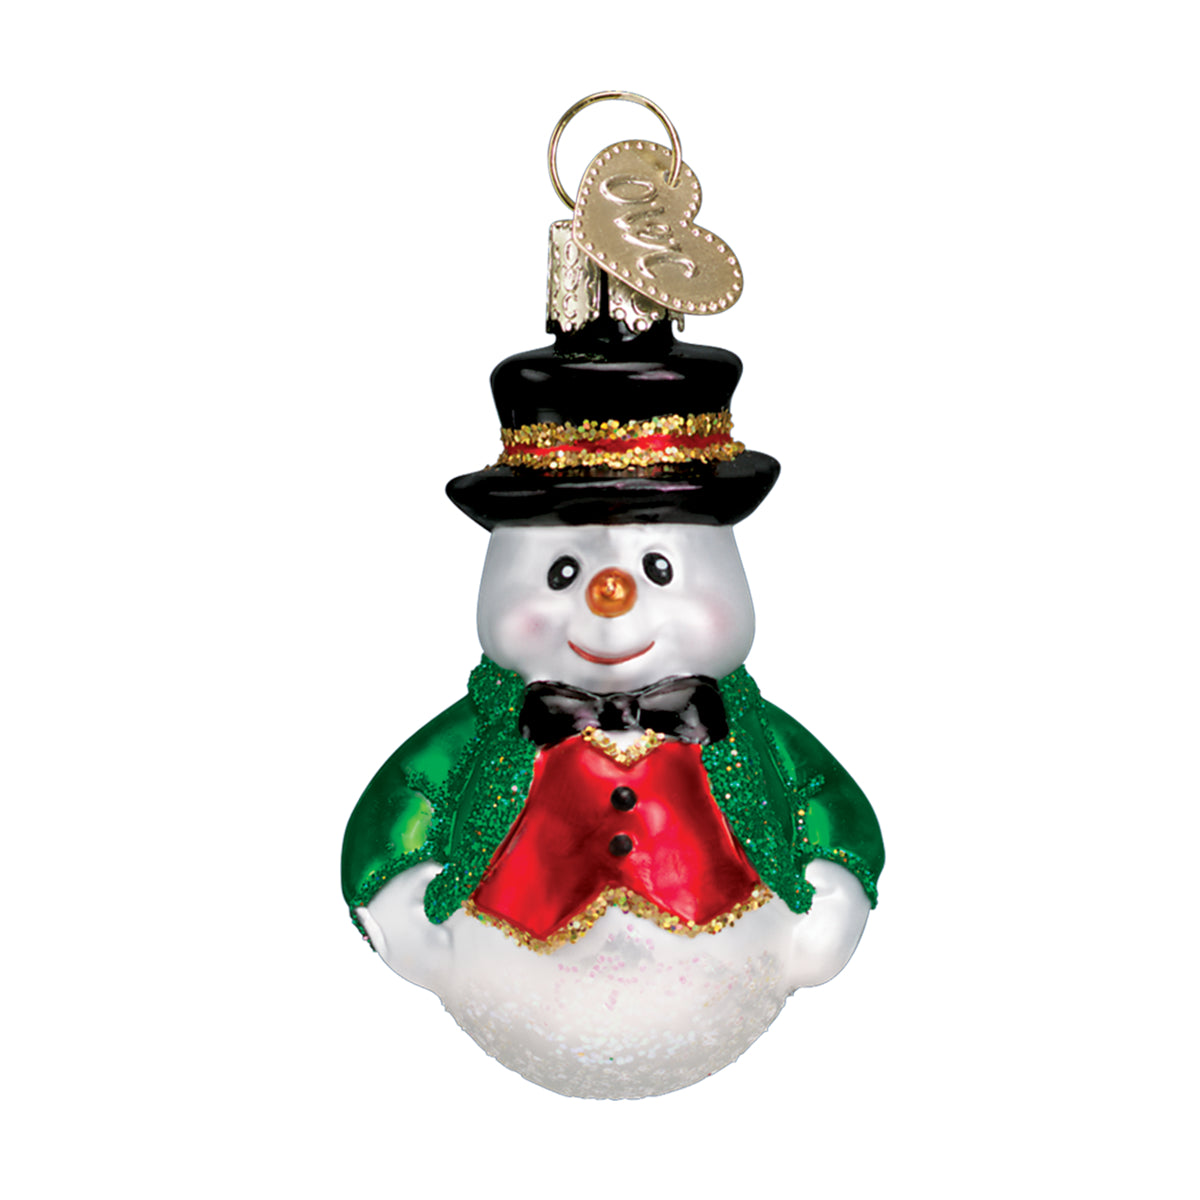 Old World Christmas 2.00 Mini Snowman Ornament Wreath Blue Mittens